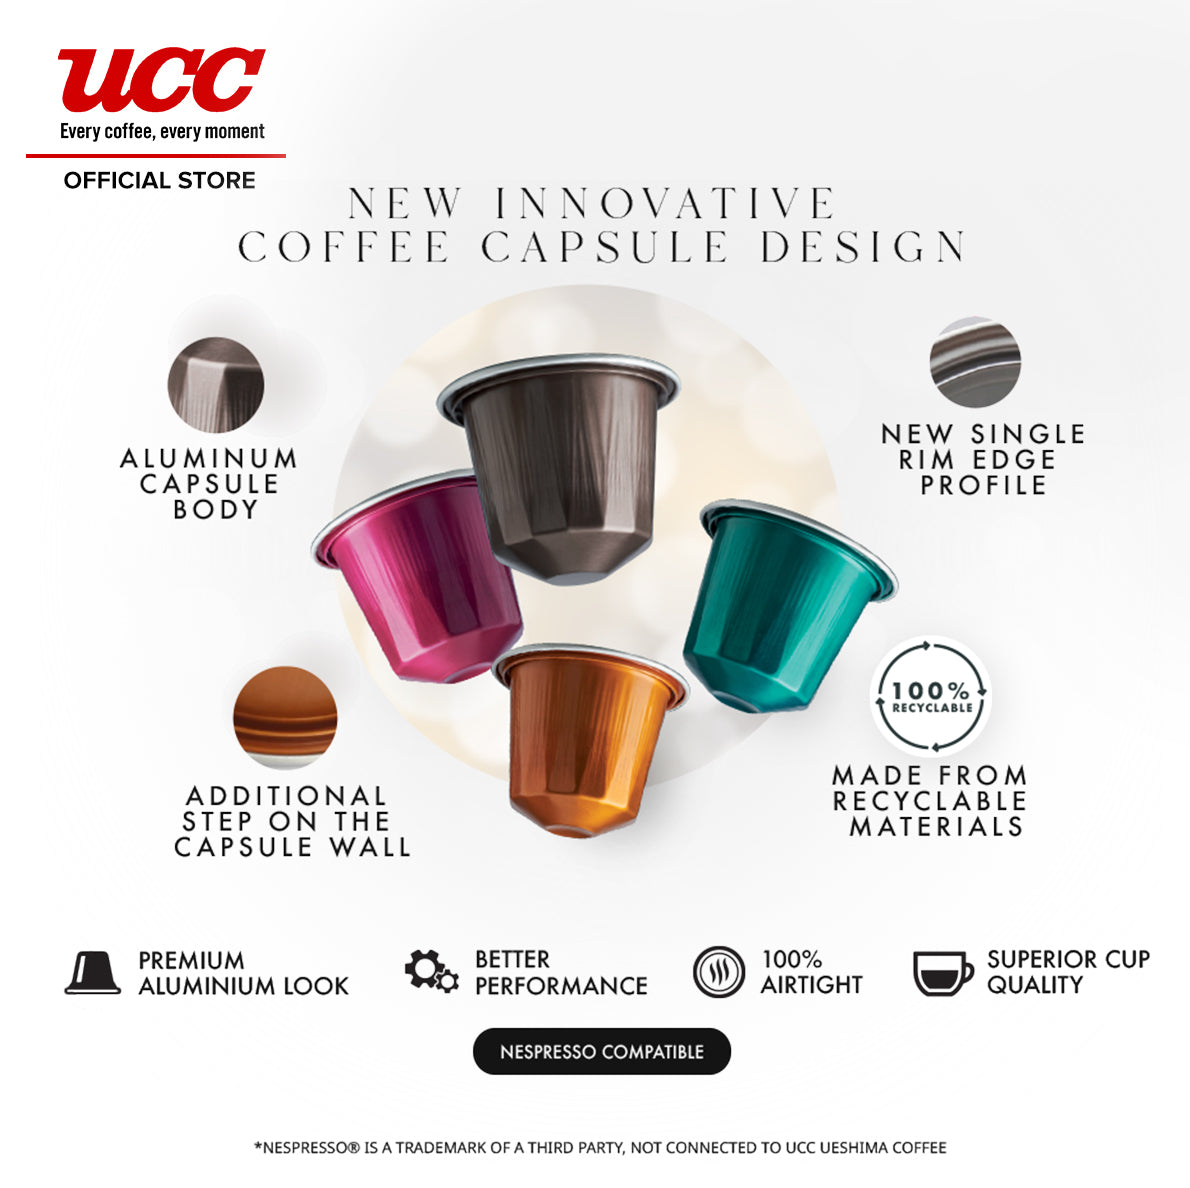 UCC Gourmet Coffee Capsule Espresso No. 07 (Bundle of 3) Compatible with Nespresso